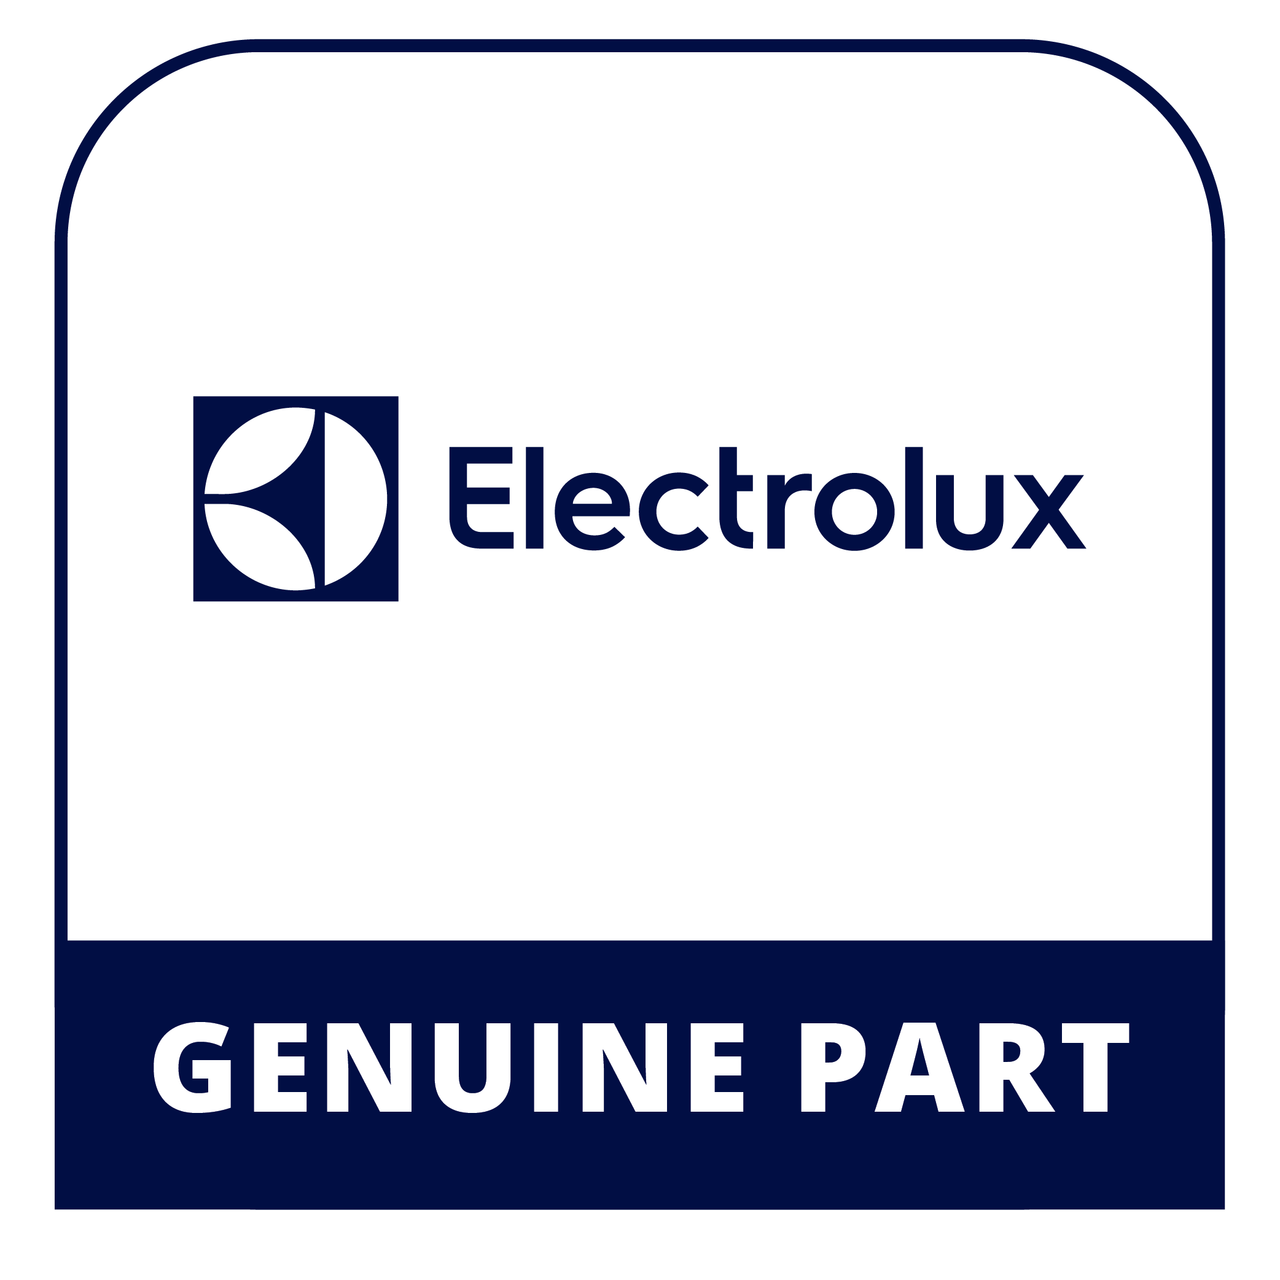 Frigidaire - Electrolux 5304477384 - Door Assembly - Genuine Electrolux Part